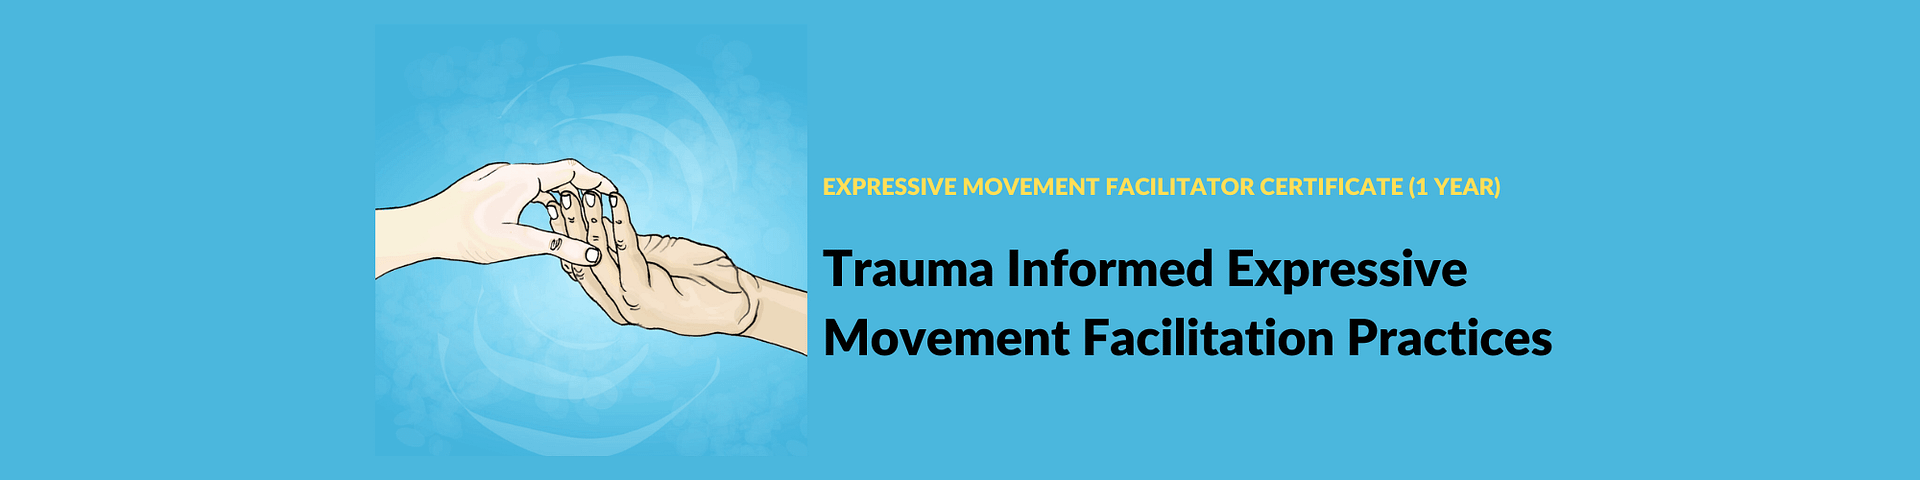 Trauma Informed Expressive Movement Facilitation Practices